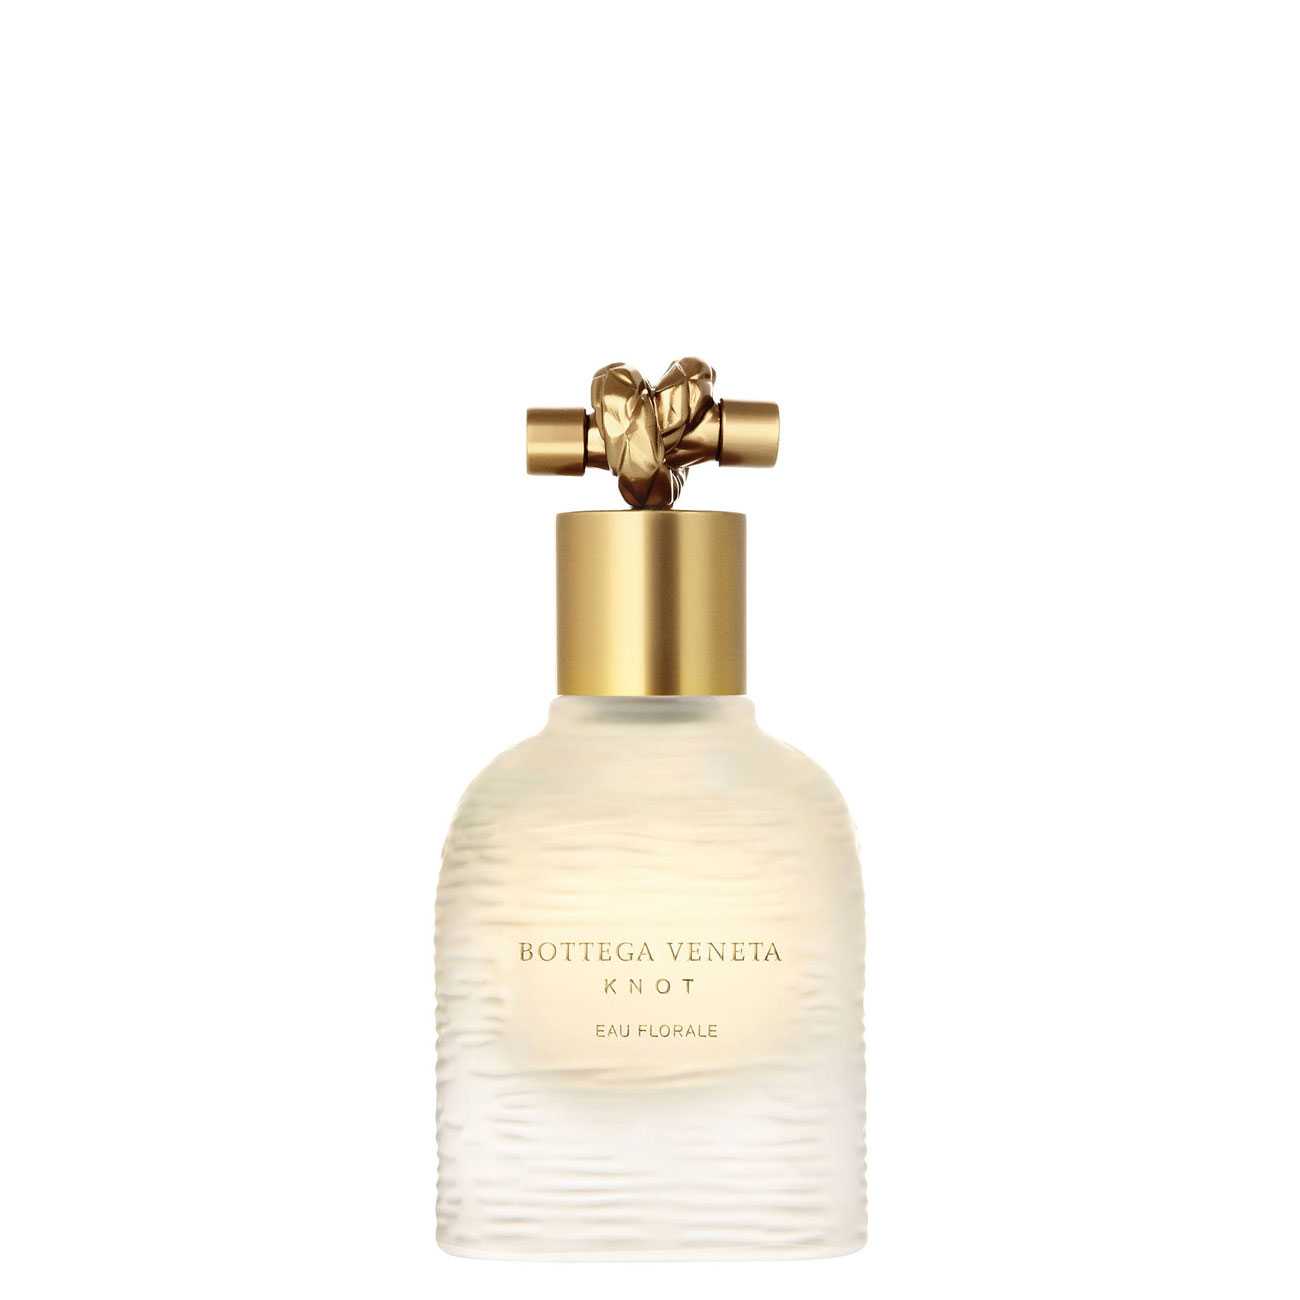 Apa de Parfum Bottega Veneta KNOT EAU FLORALE 50ml cu comanda online